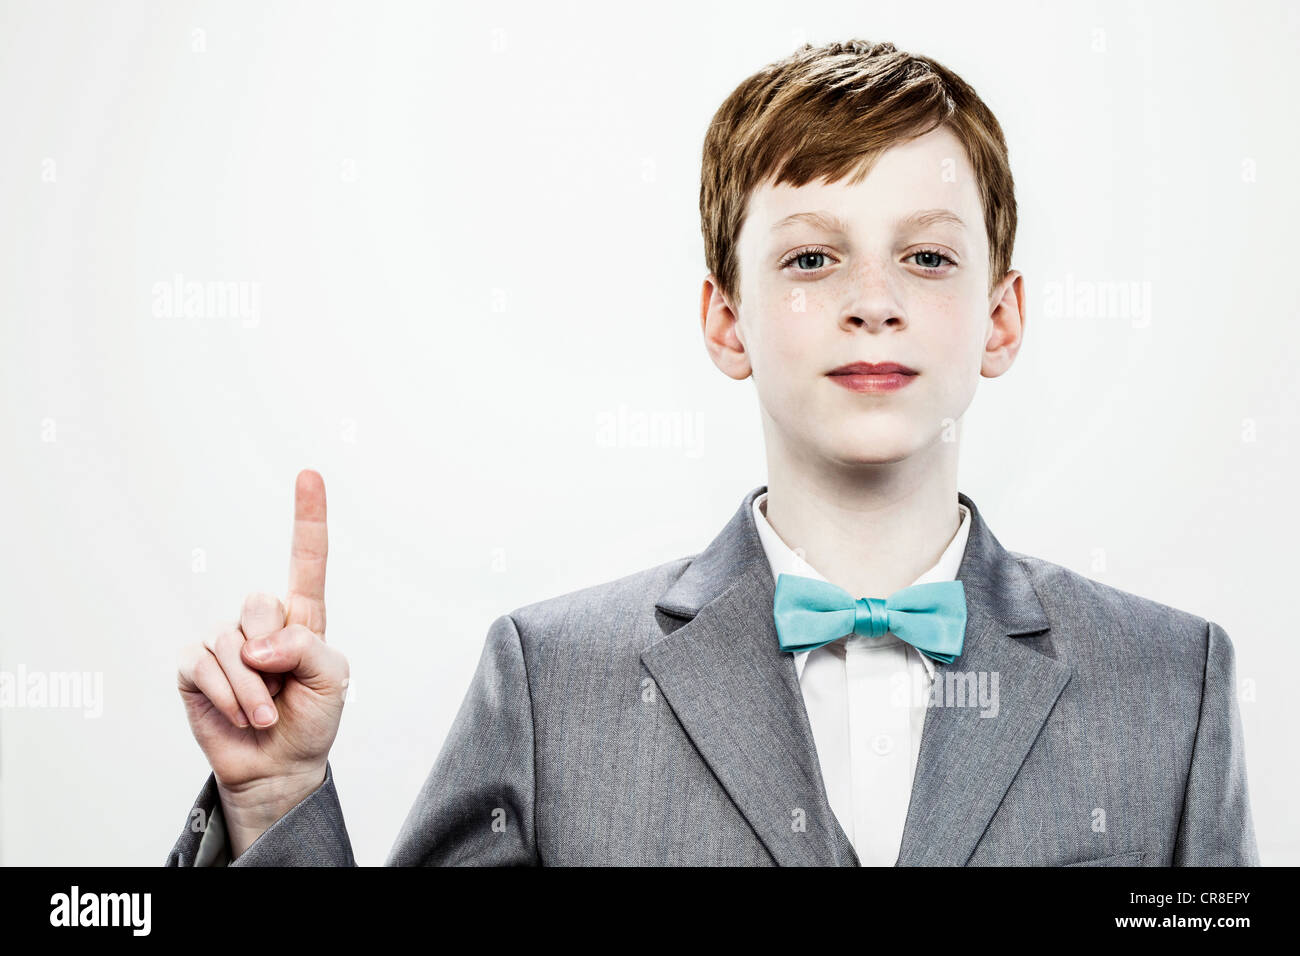 Boy pointing upwards with index finger Stock Photo